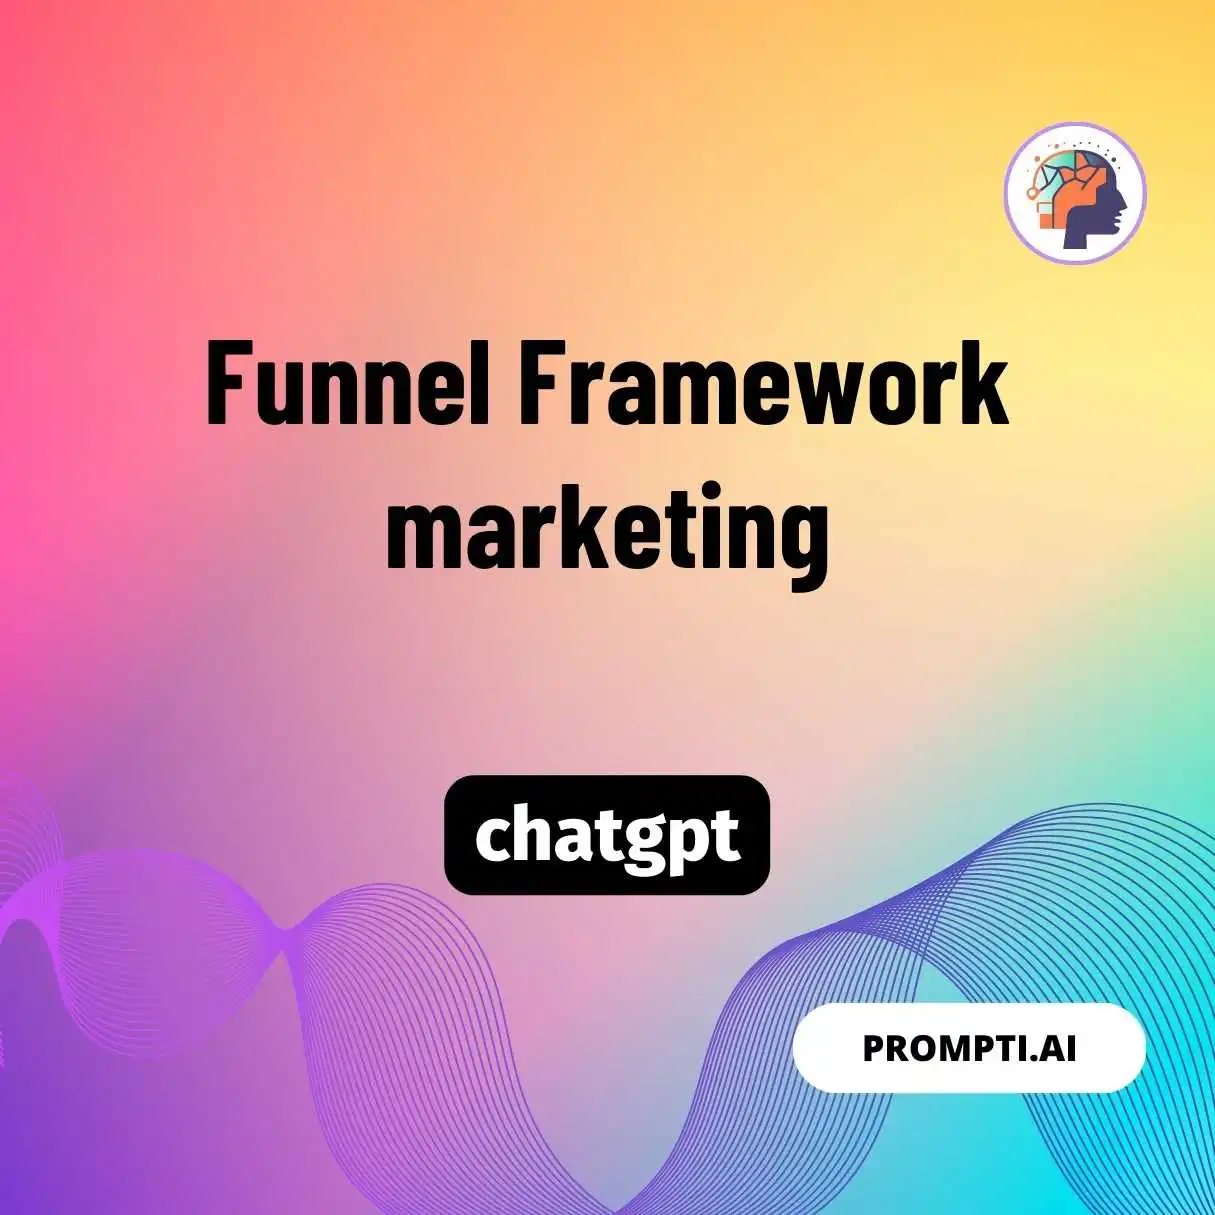 Funnel Framework marketing